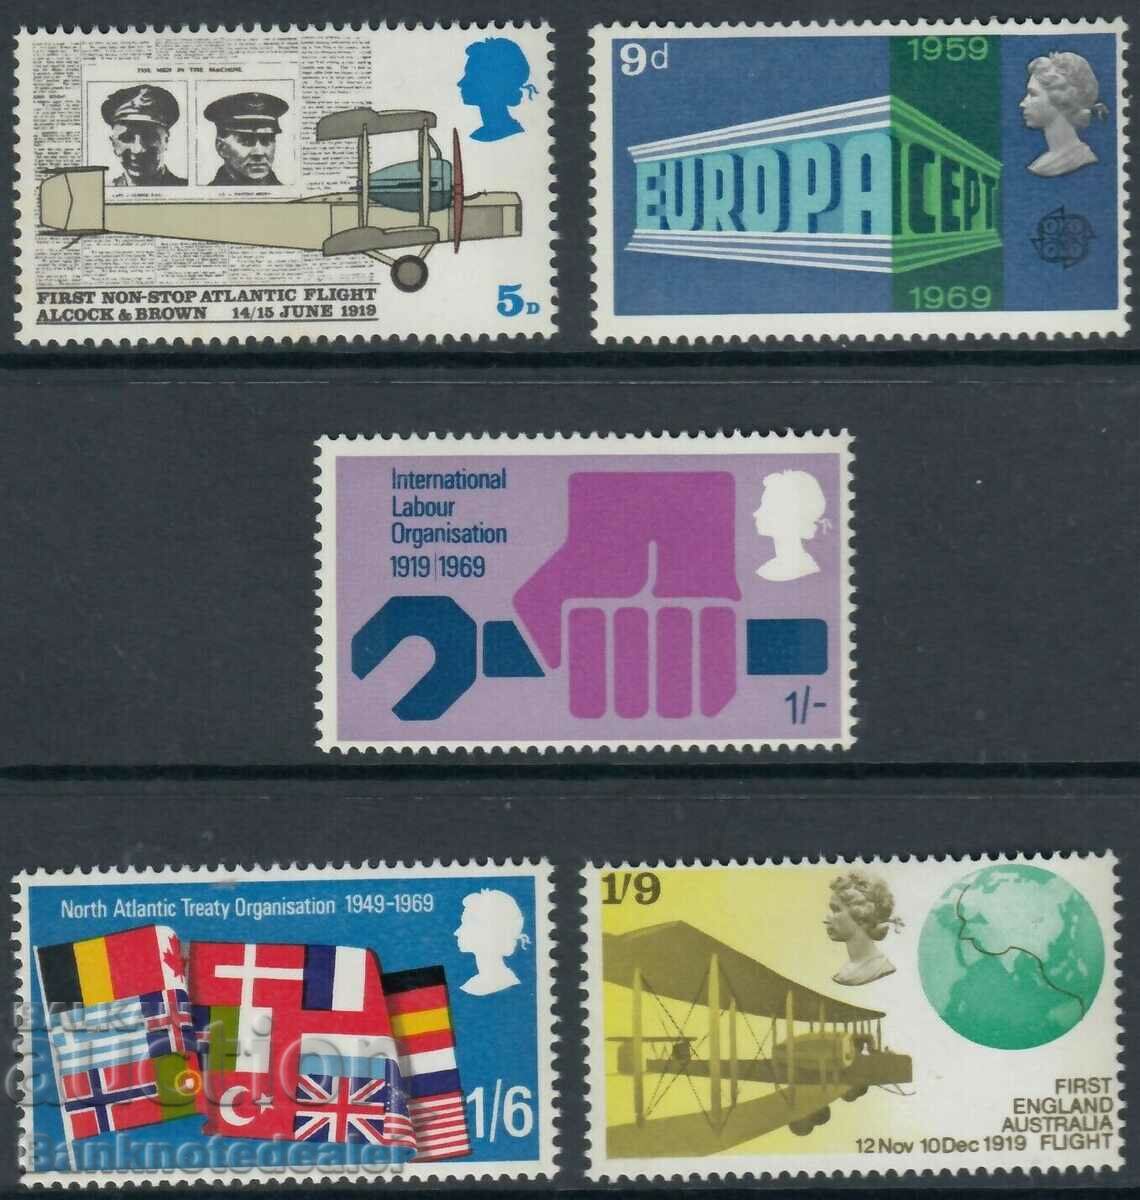 GB 1969 Set aniversări SG 791-795 monetărie